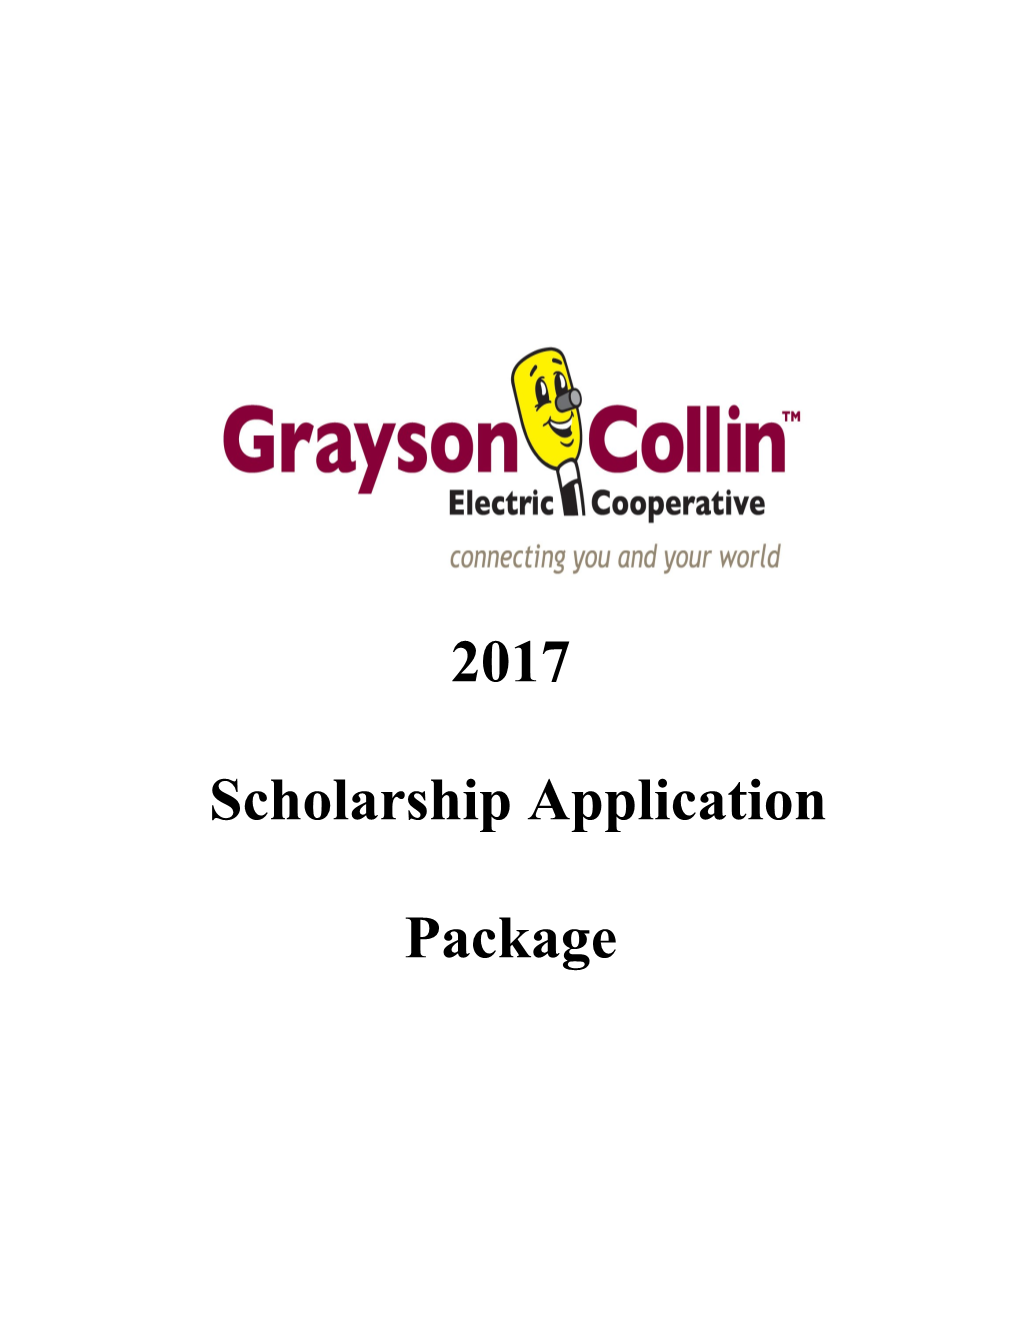 The Grayson-Collin Electric Cooperative Scholarship